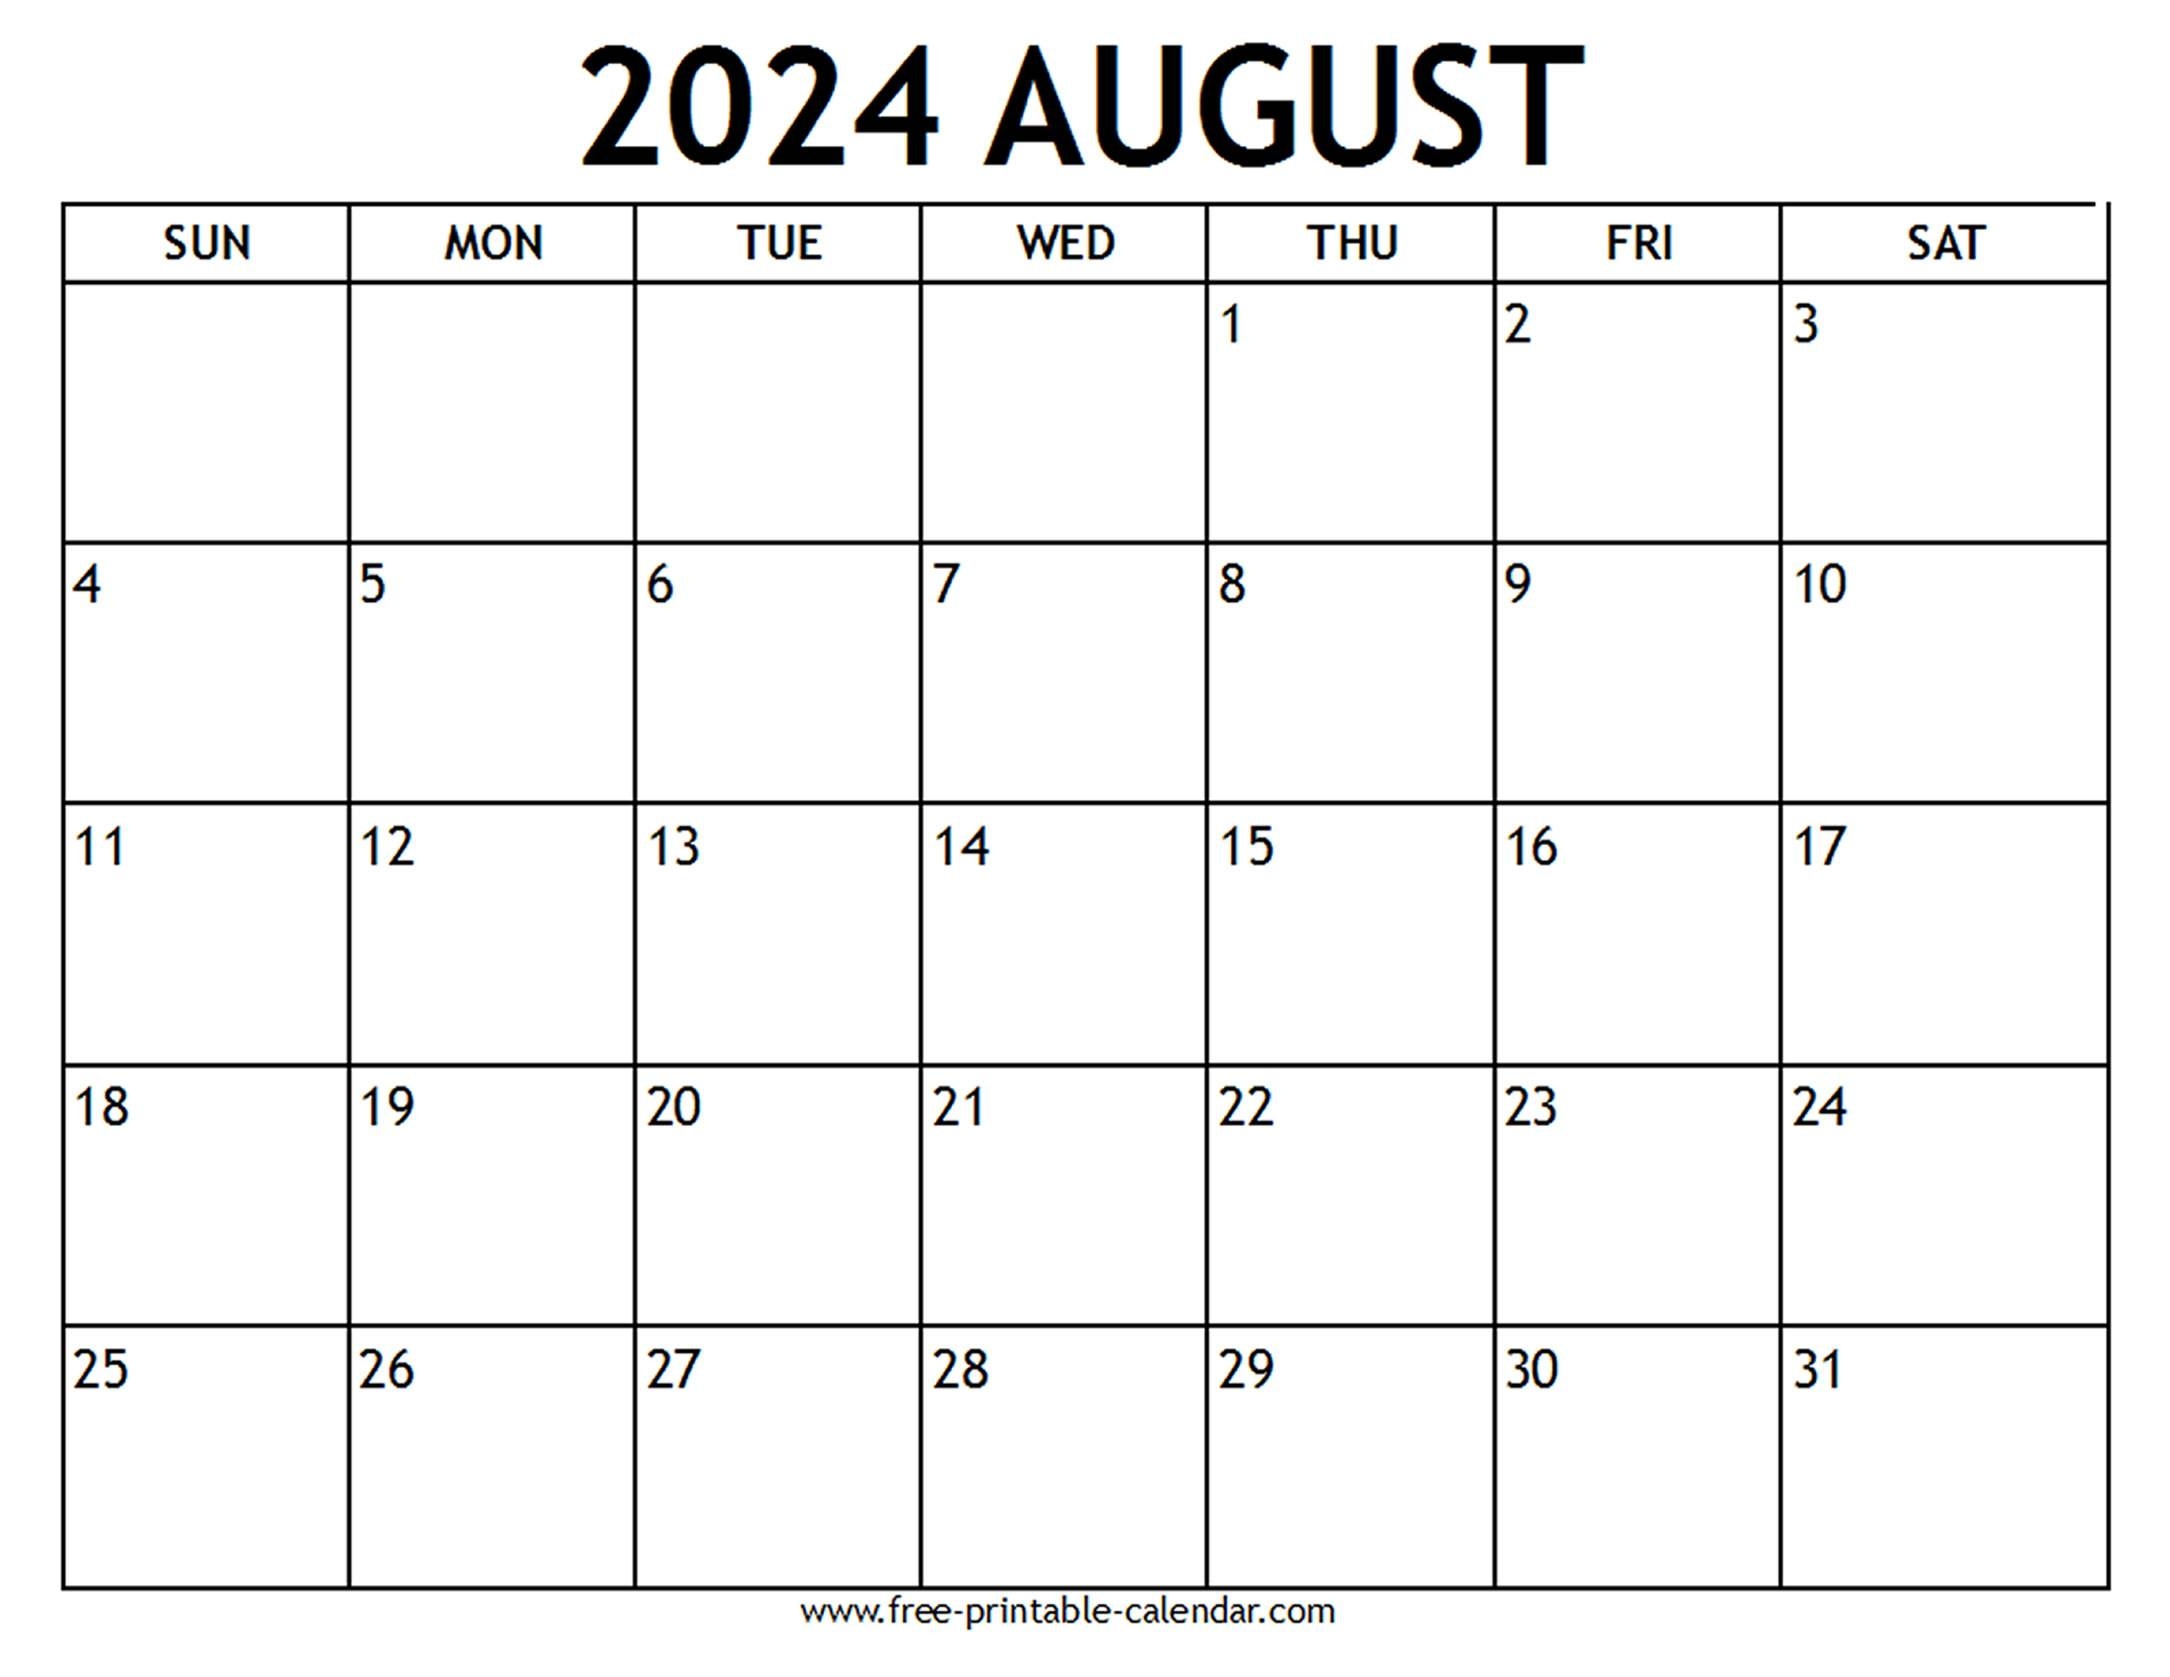 August 2024 Calendar Us Holidays - Free-Printable-Calendar within Free Printable August 2024 Monthly Calendar With Holidays